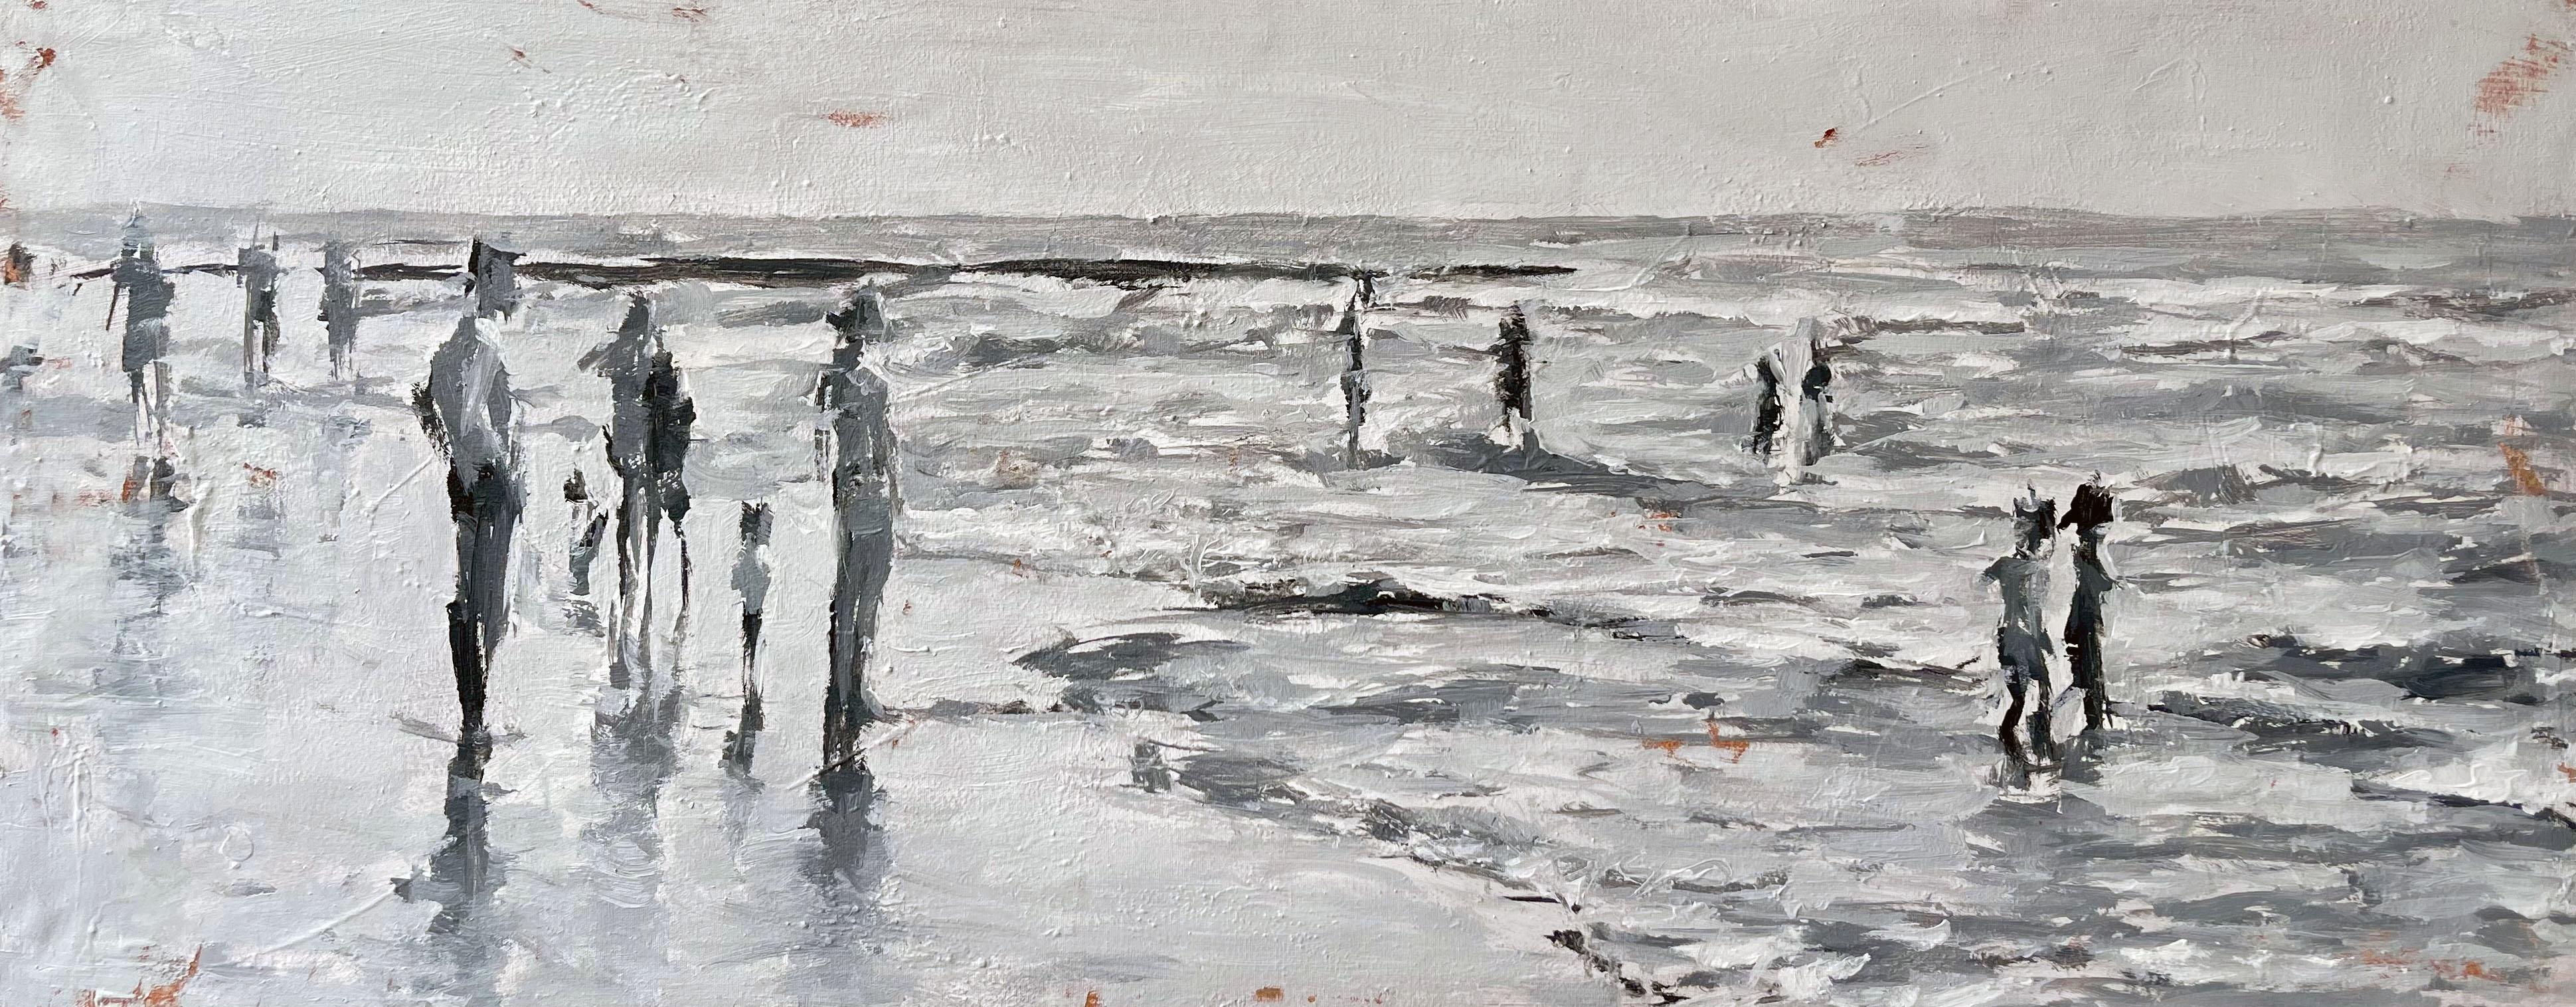 Luigi Christopher Veggetti Landscape Painting - ESTATE #2. From the Beaches series